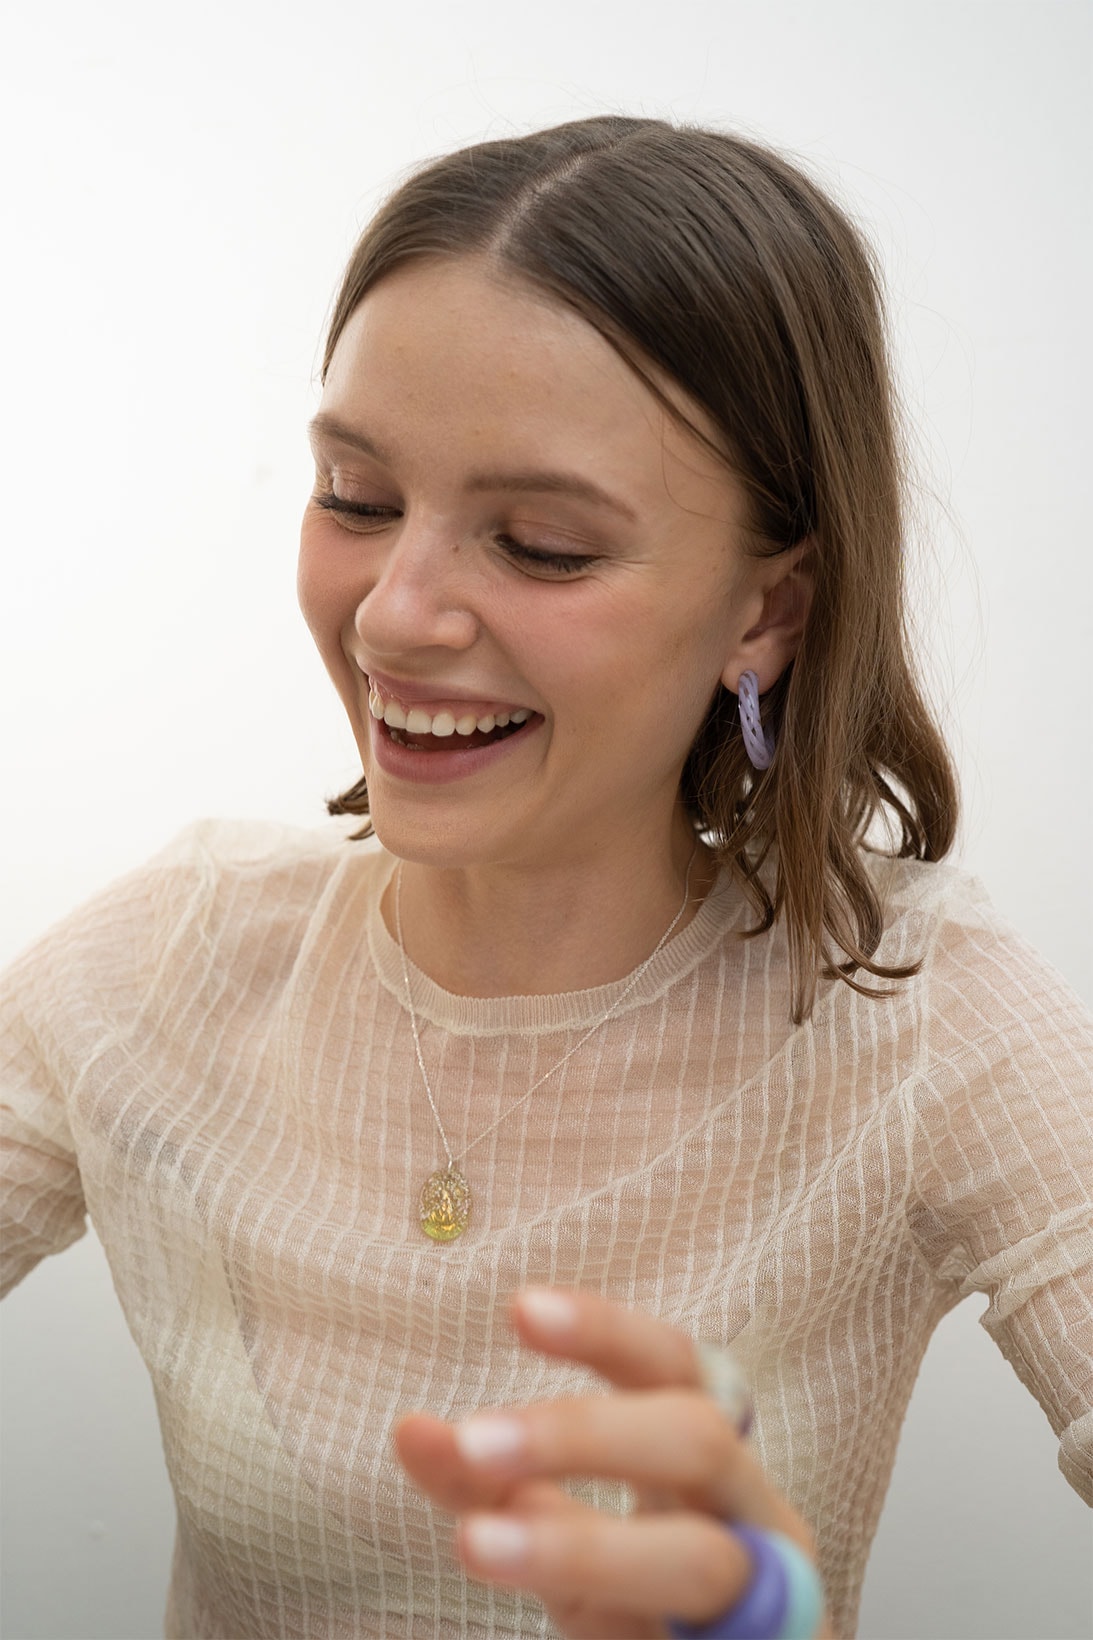 keane brooklyn glass jewelry brand earrings accessories hands sheer white top